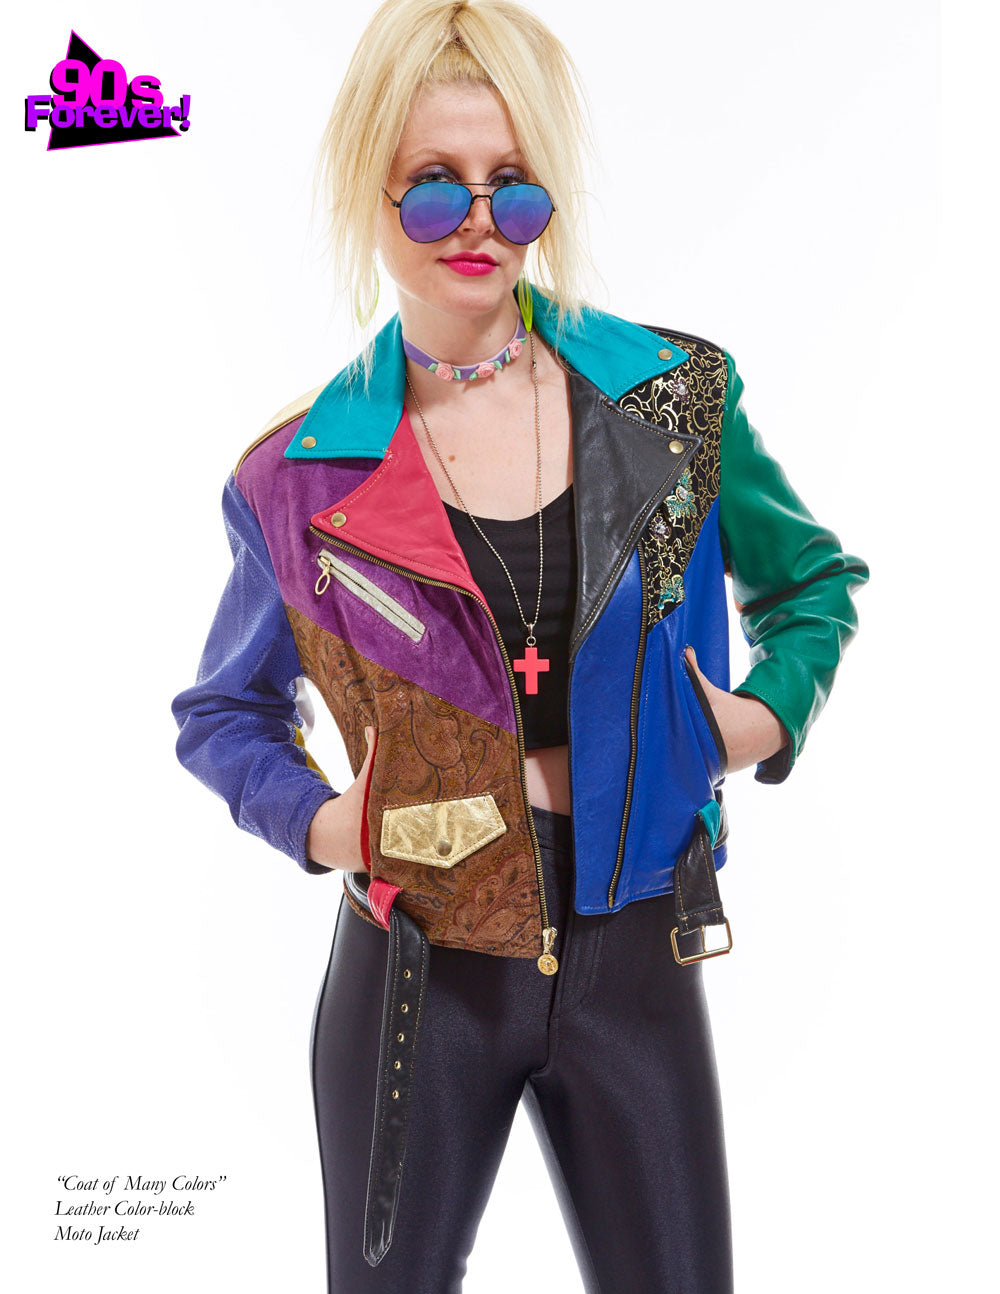 90s Forever Retro Vintage Fashion Apparel Lookbook - Leather colorblock moto jacket